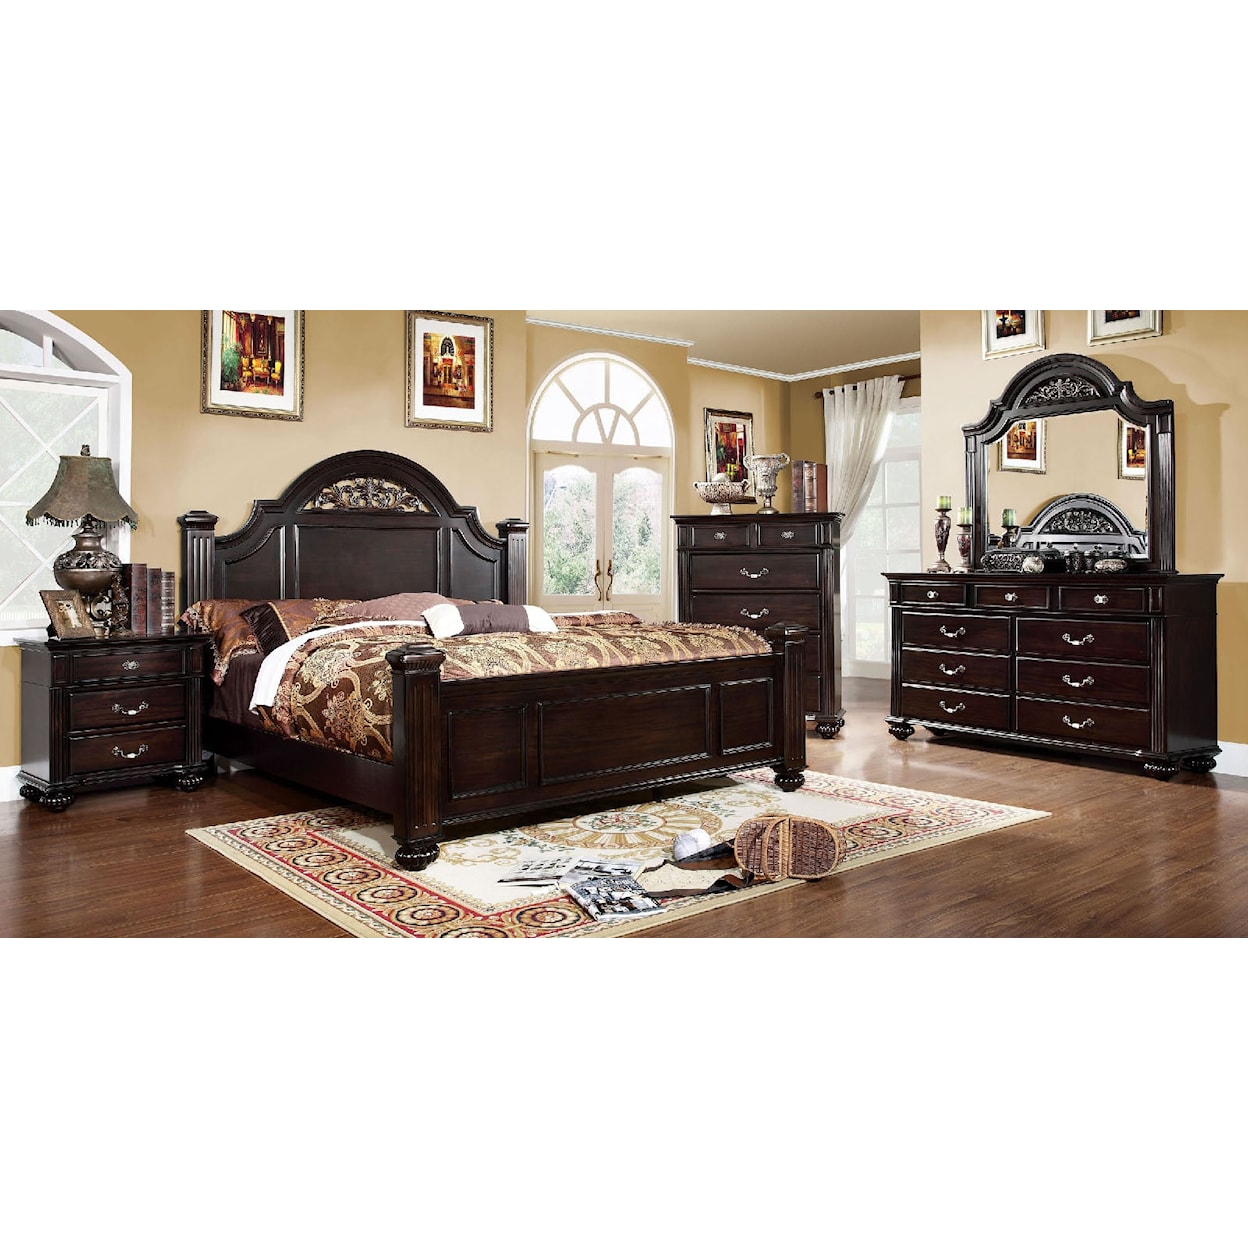 Furniture of America Syracuse 4-Piece Queen Bedroom Set